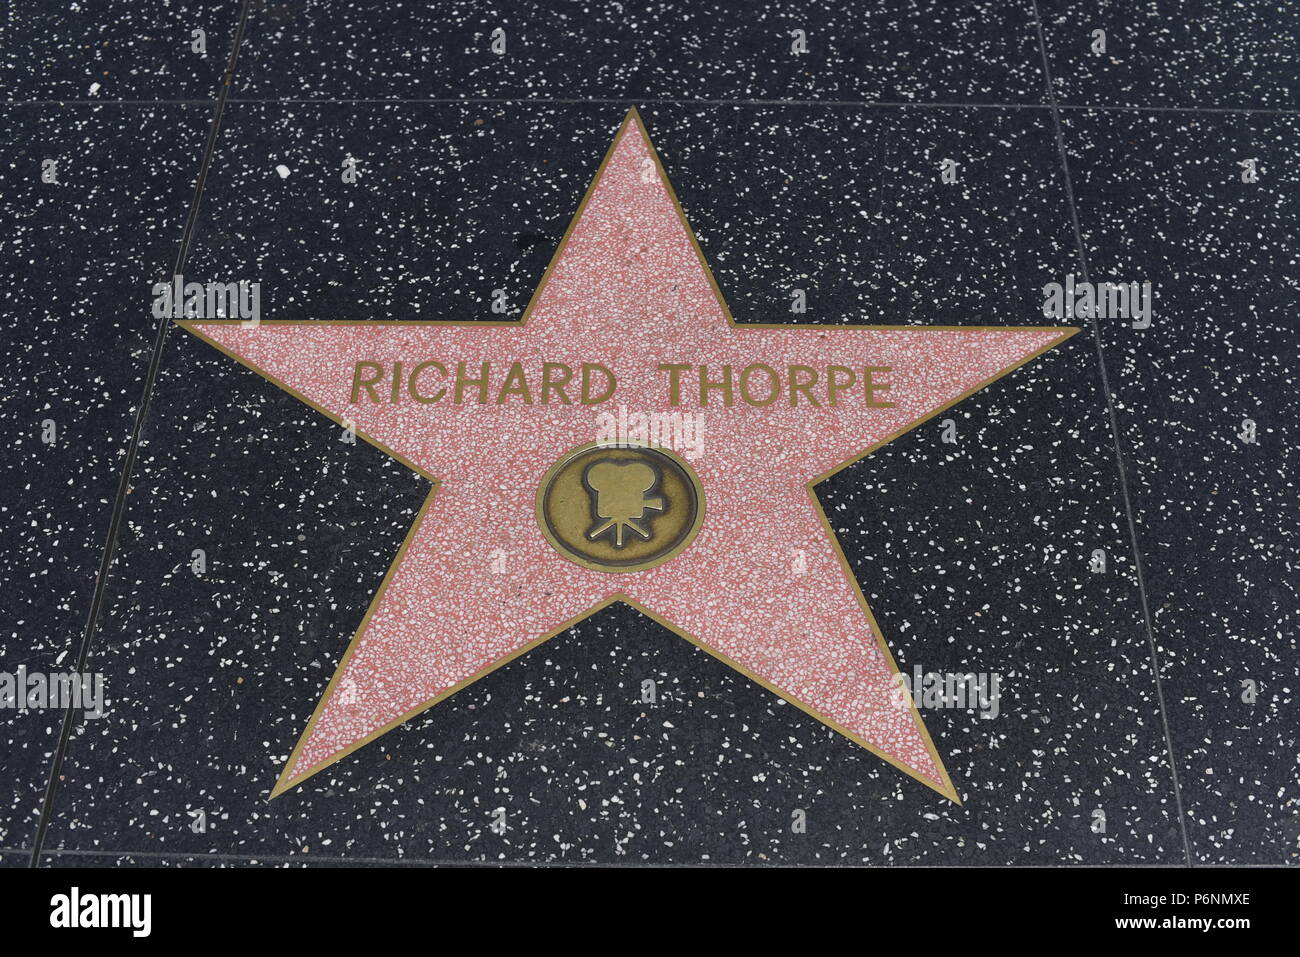 HOLLYWOOD, CA - 29 Giugno: Richard Thorpe stella sulla Hollywood Walk of Fame in Hollywood, la California il 29 giugno 2018. Foto Stock